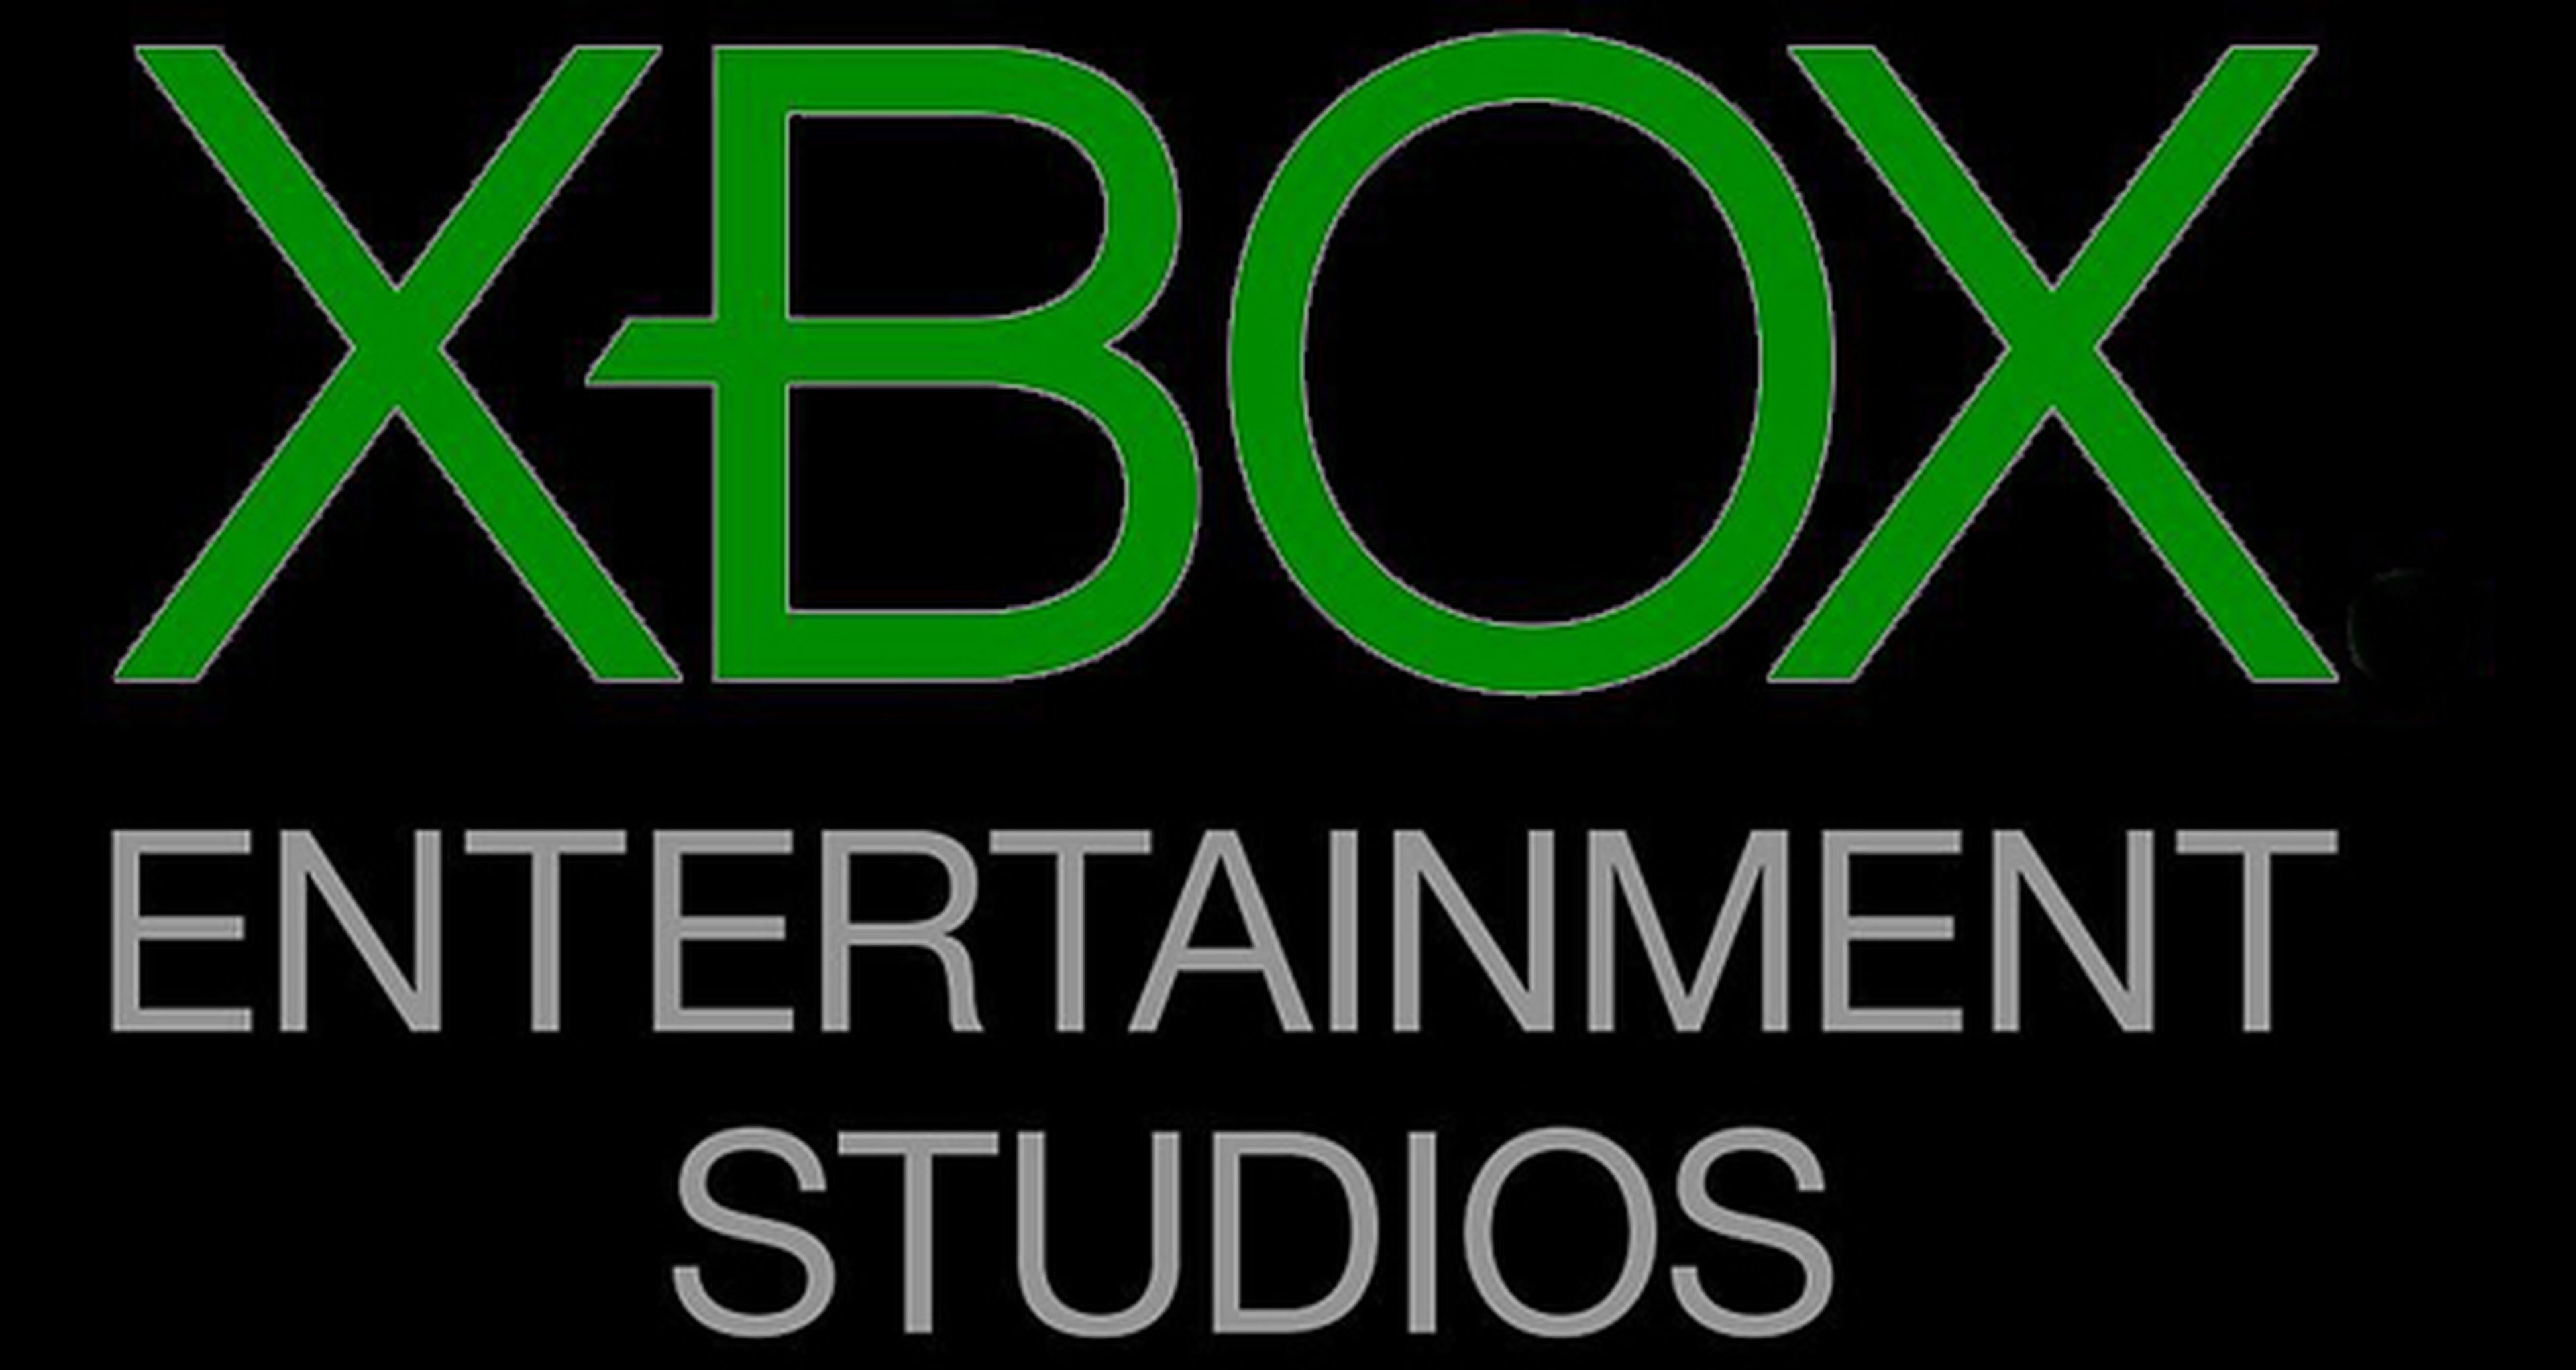 Llega la primera serie exclusiva para Xbox